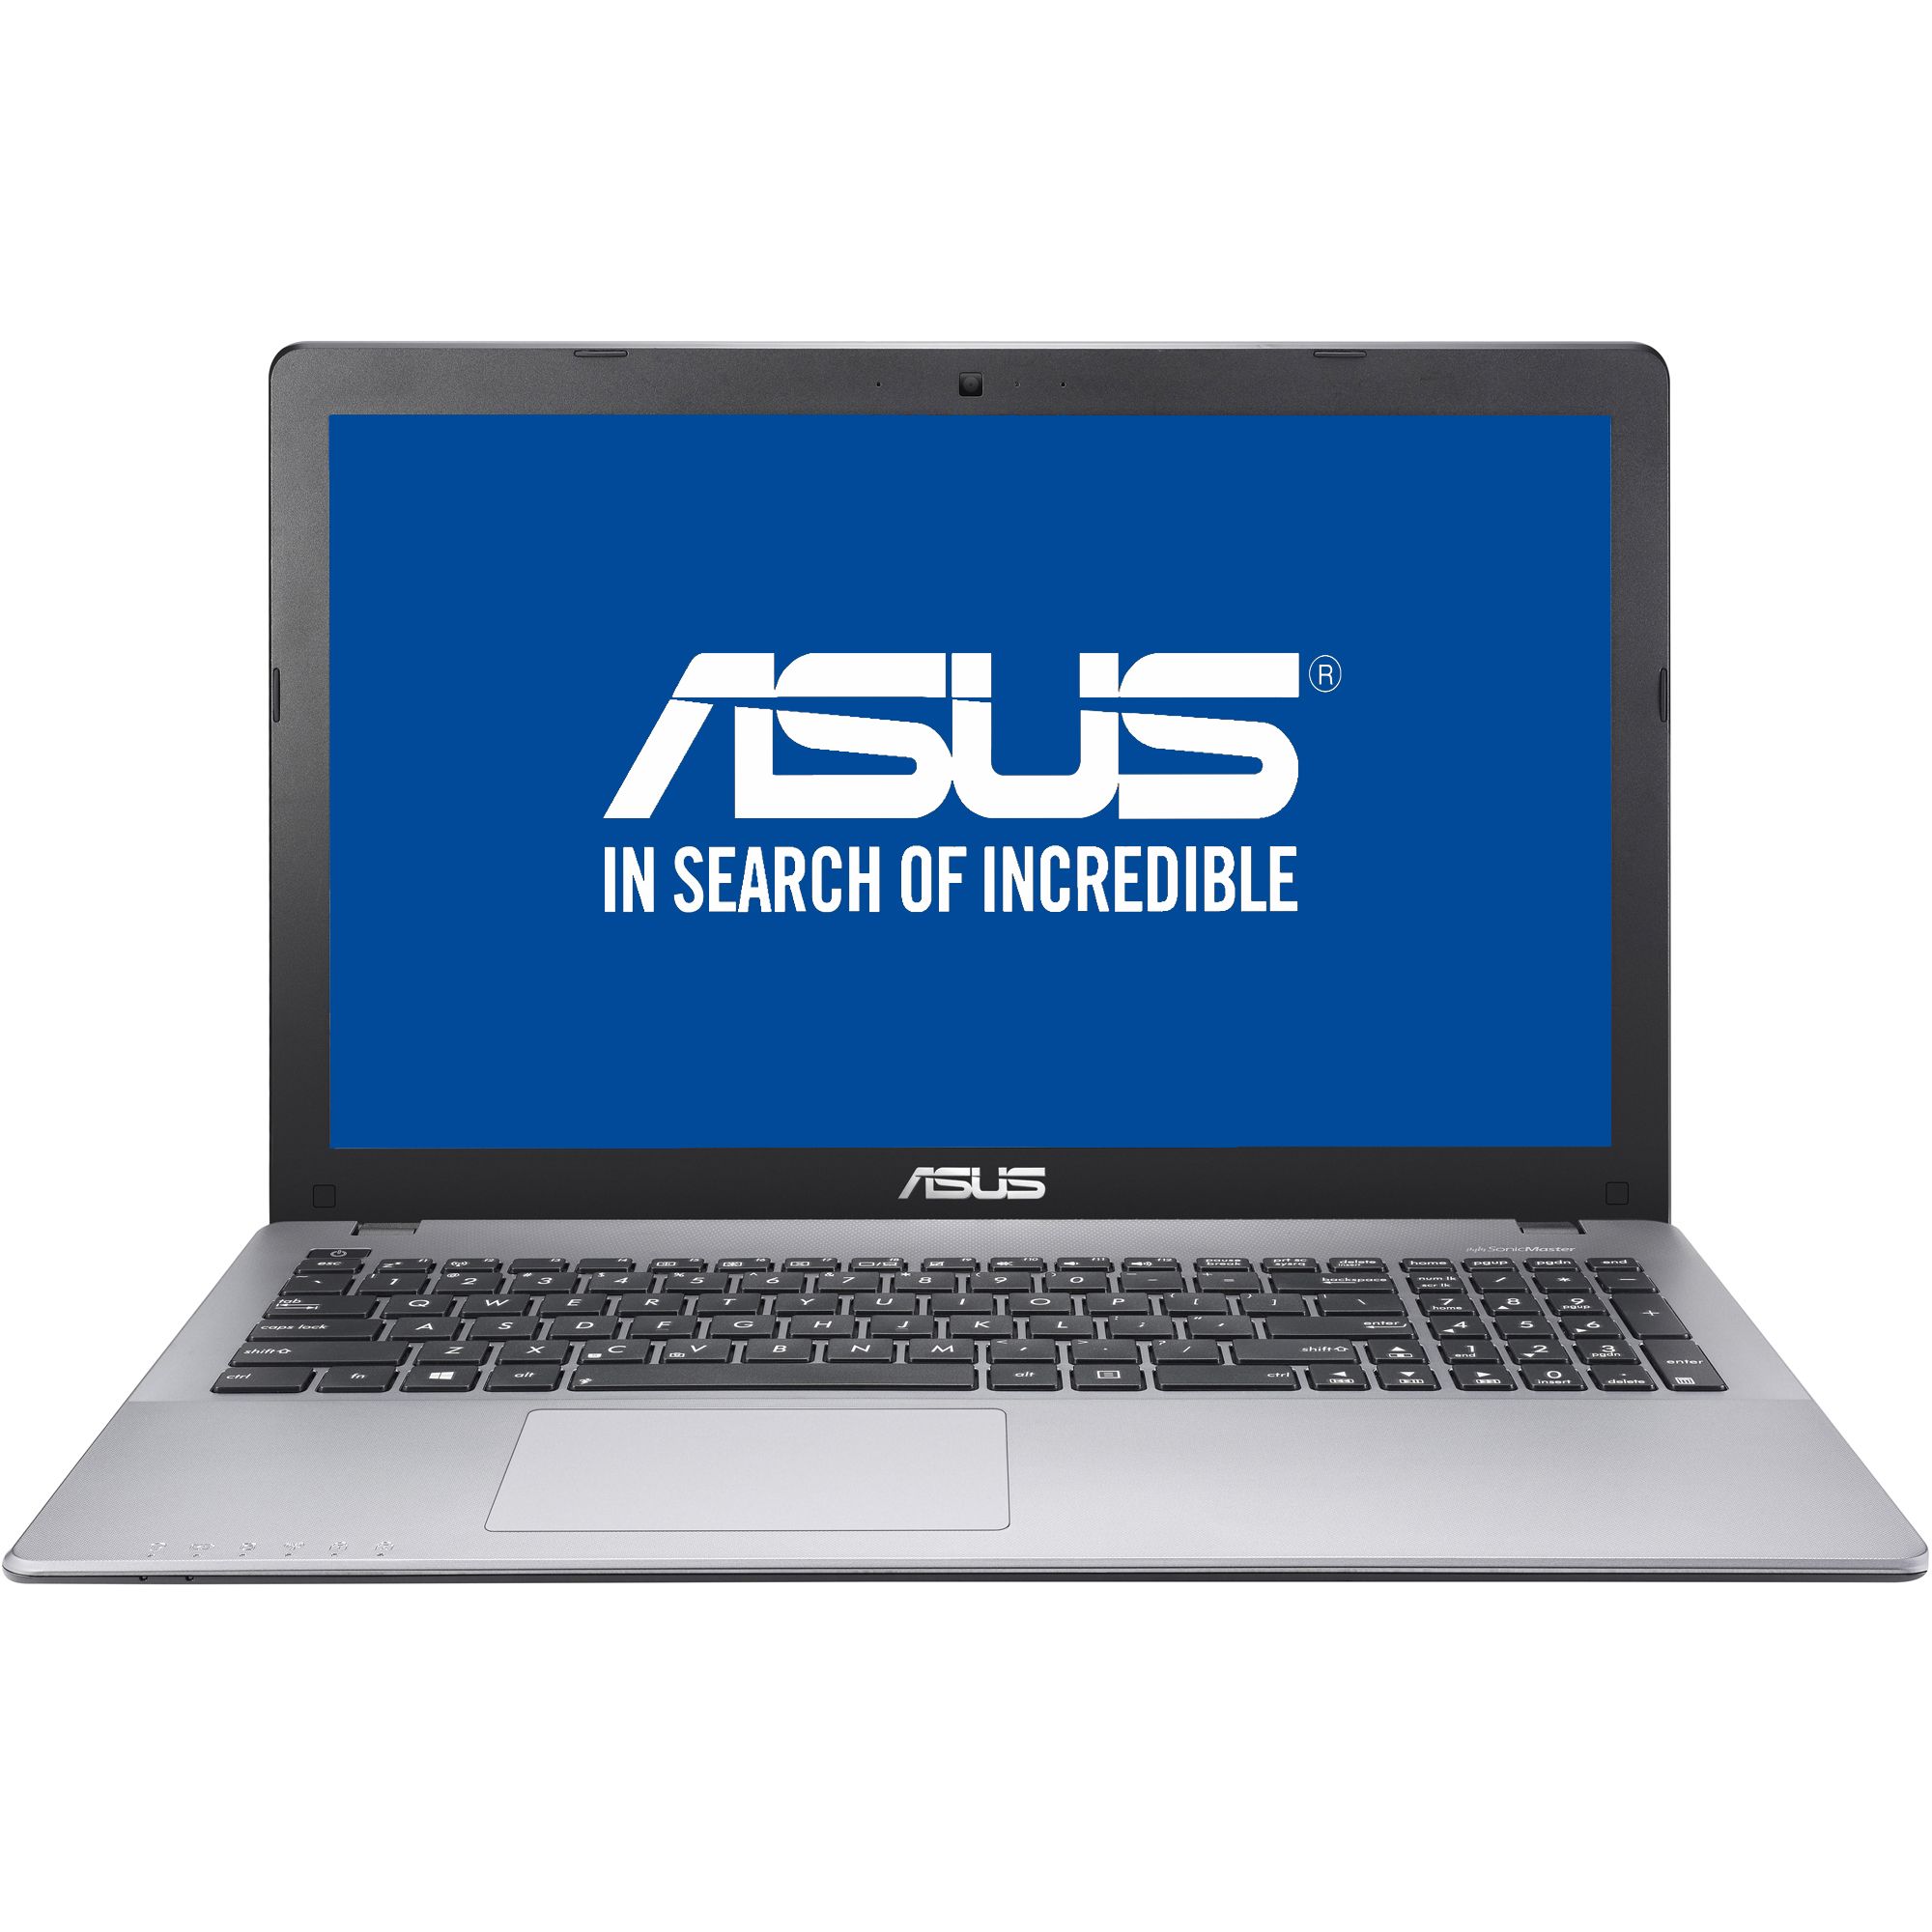 Laptop ASUS A550VX-GO635, Intel Core i5-7300HQ, 4GB DDR4, HDD 1TB, nVidia GeForce GTX 950M 2GB, Free DOS